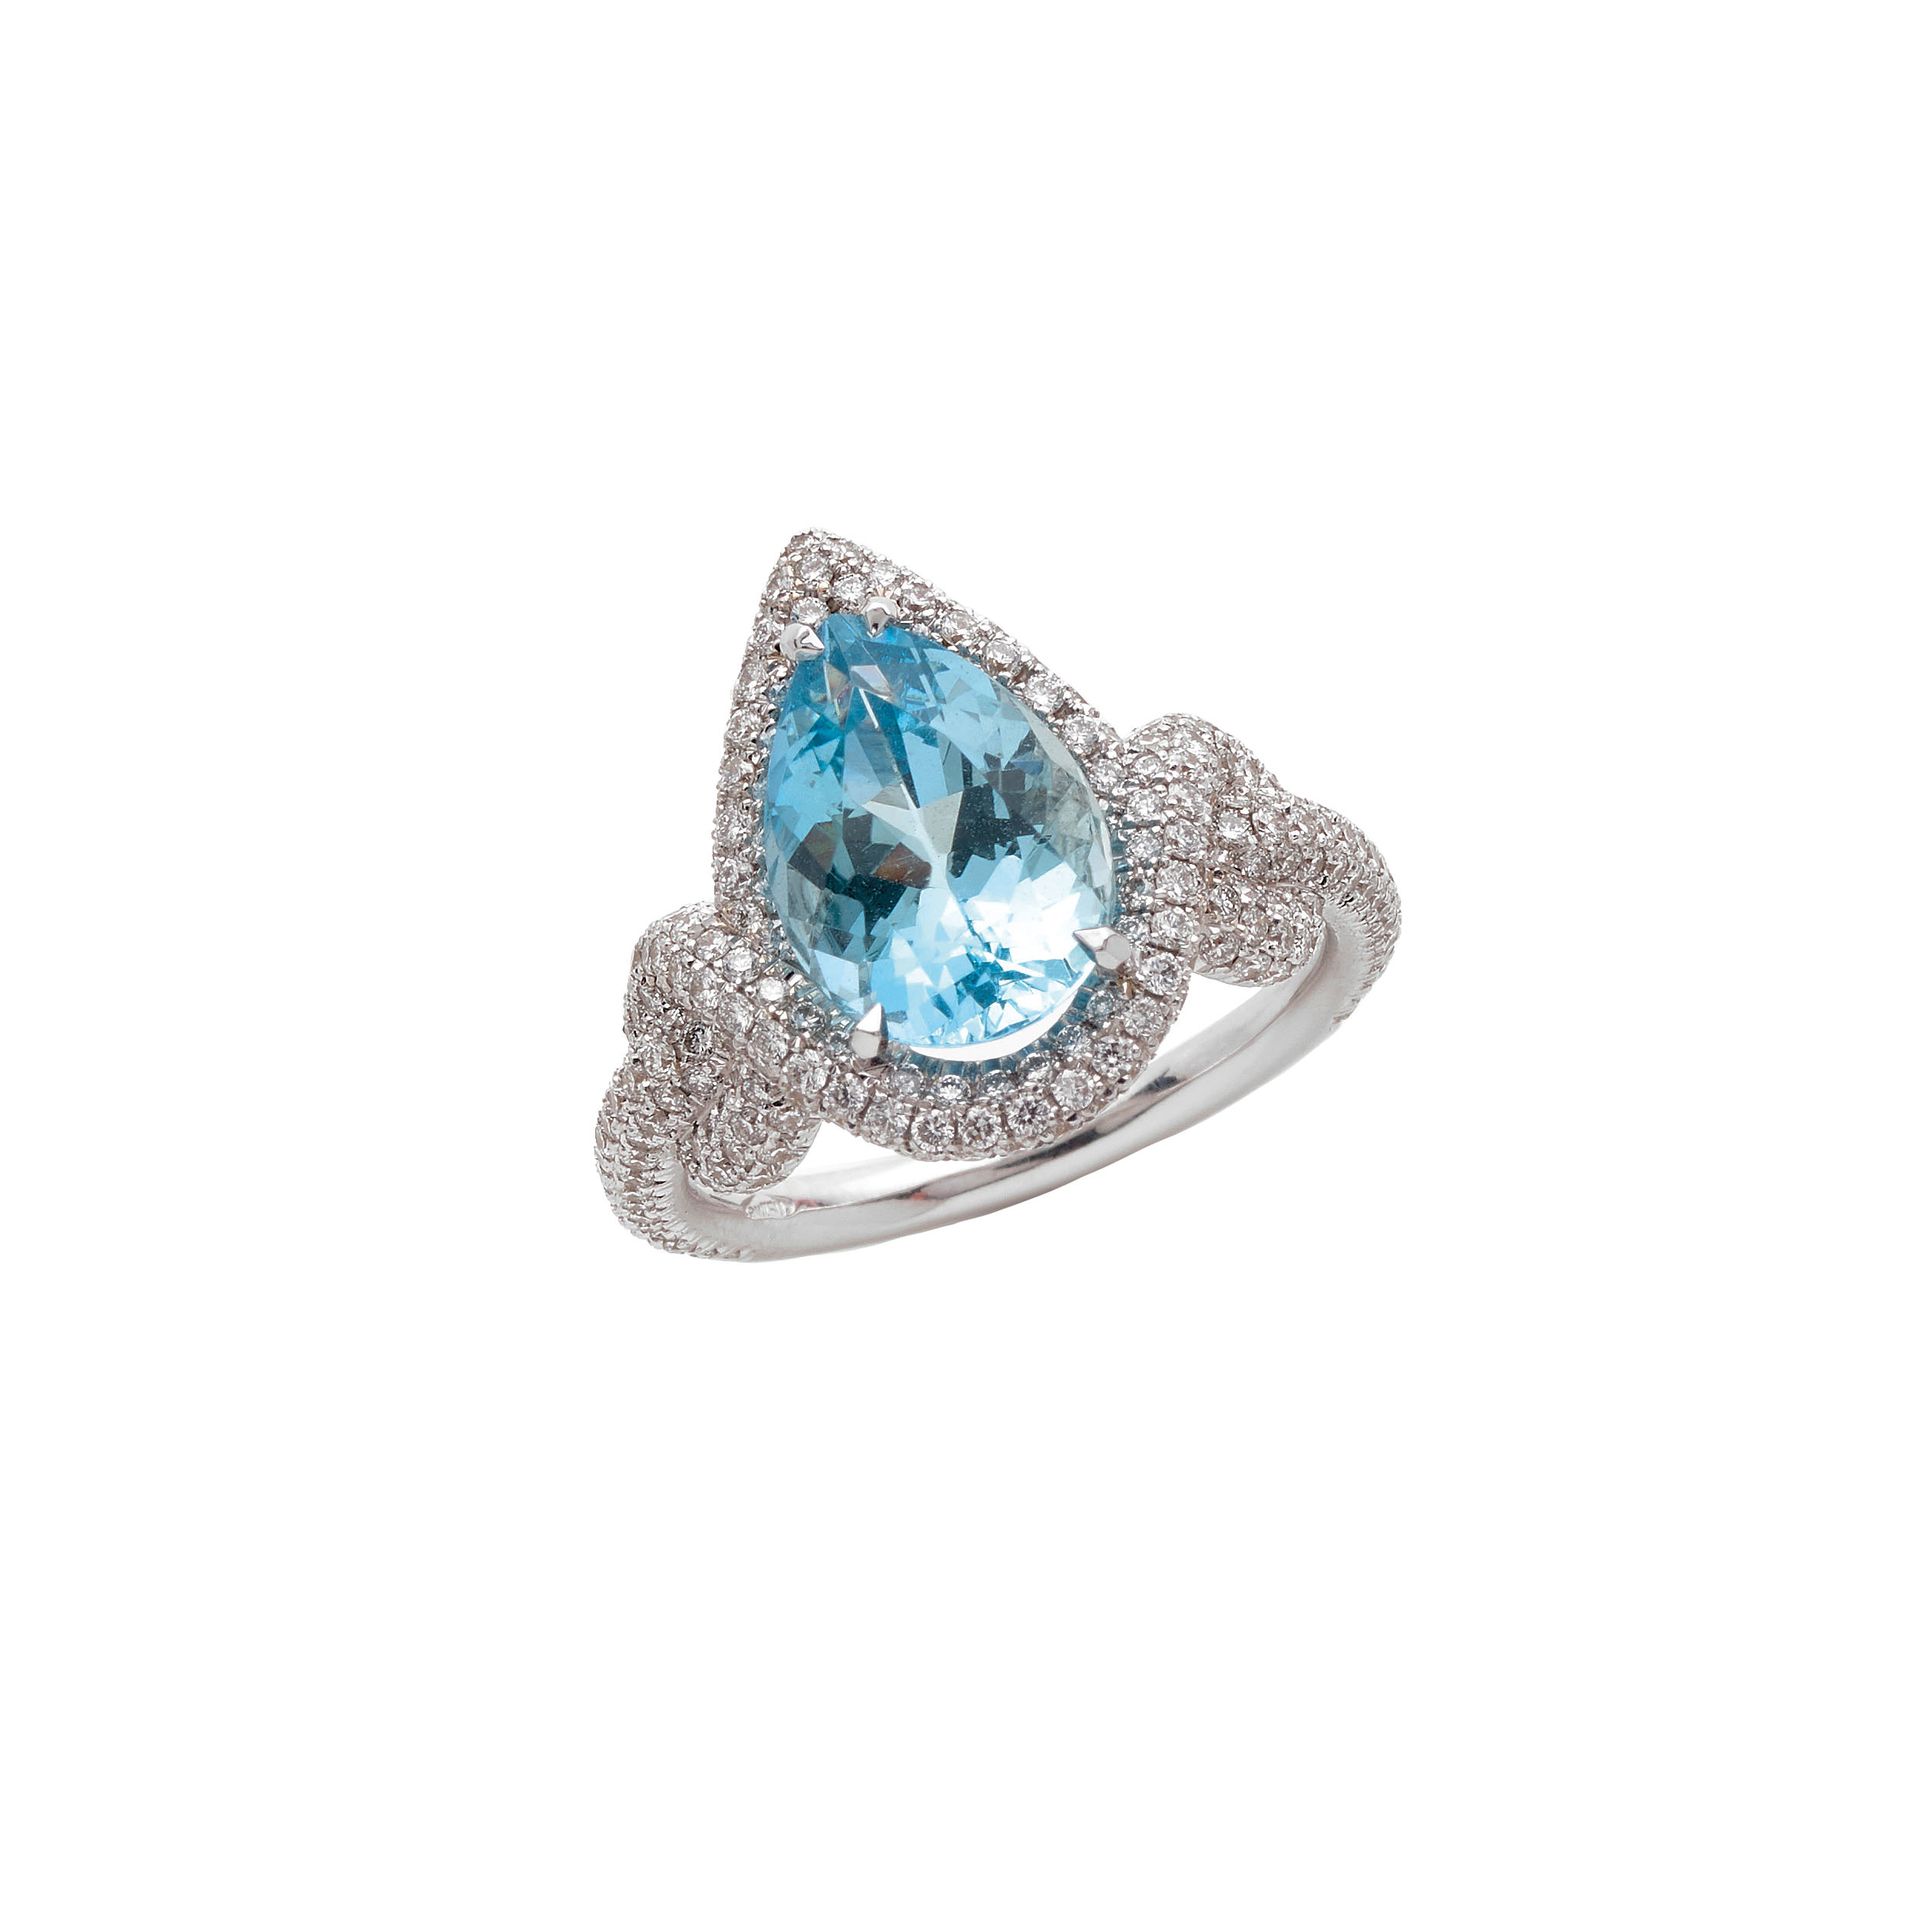 Null 美丽的戒指

镶有梨形海蓝宝石的钻石和18K金戒指，重量约为3克拉。

镶有梨形海蓝宝石的钻石和18K金戒指，重量约为3克拉。



RC :

石头&hellip;